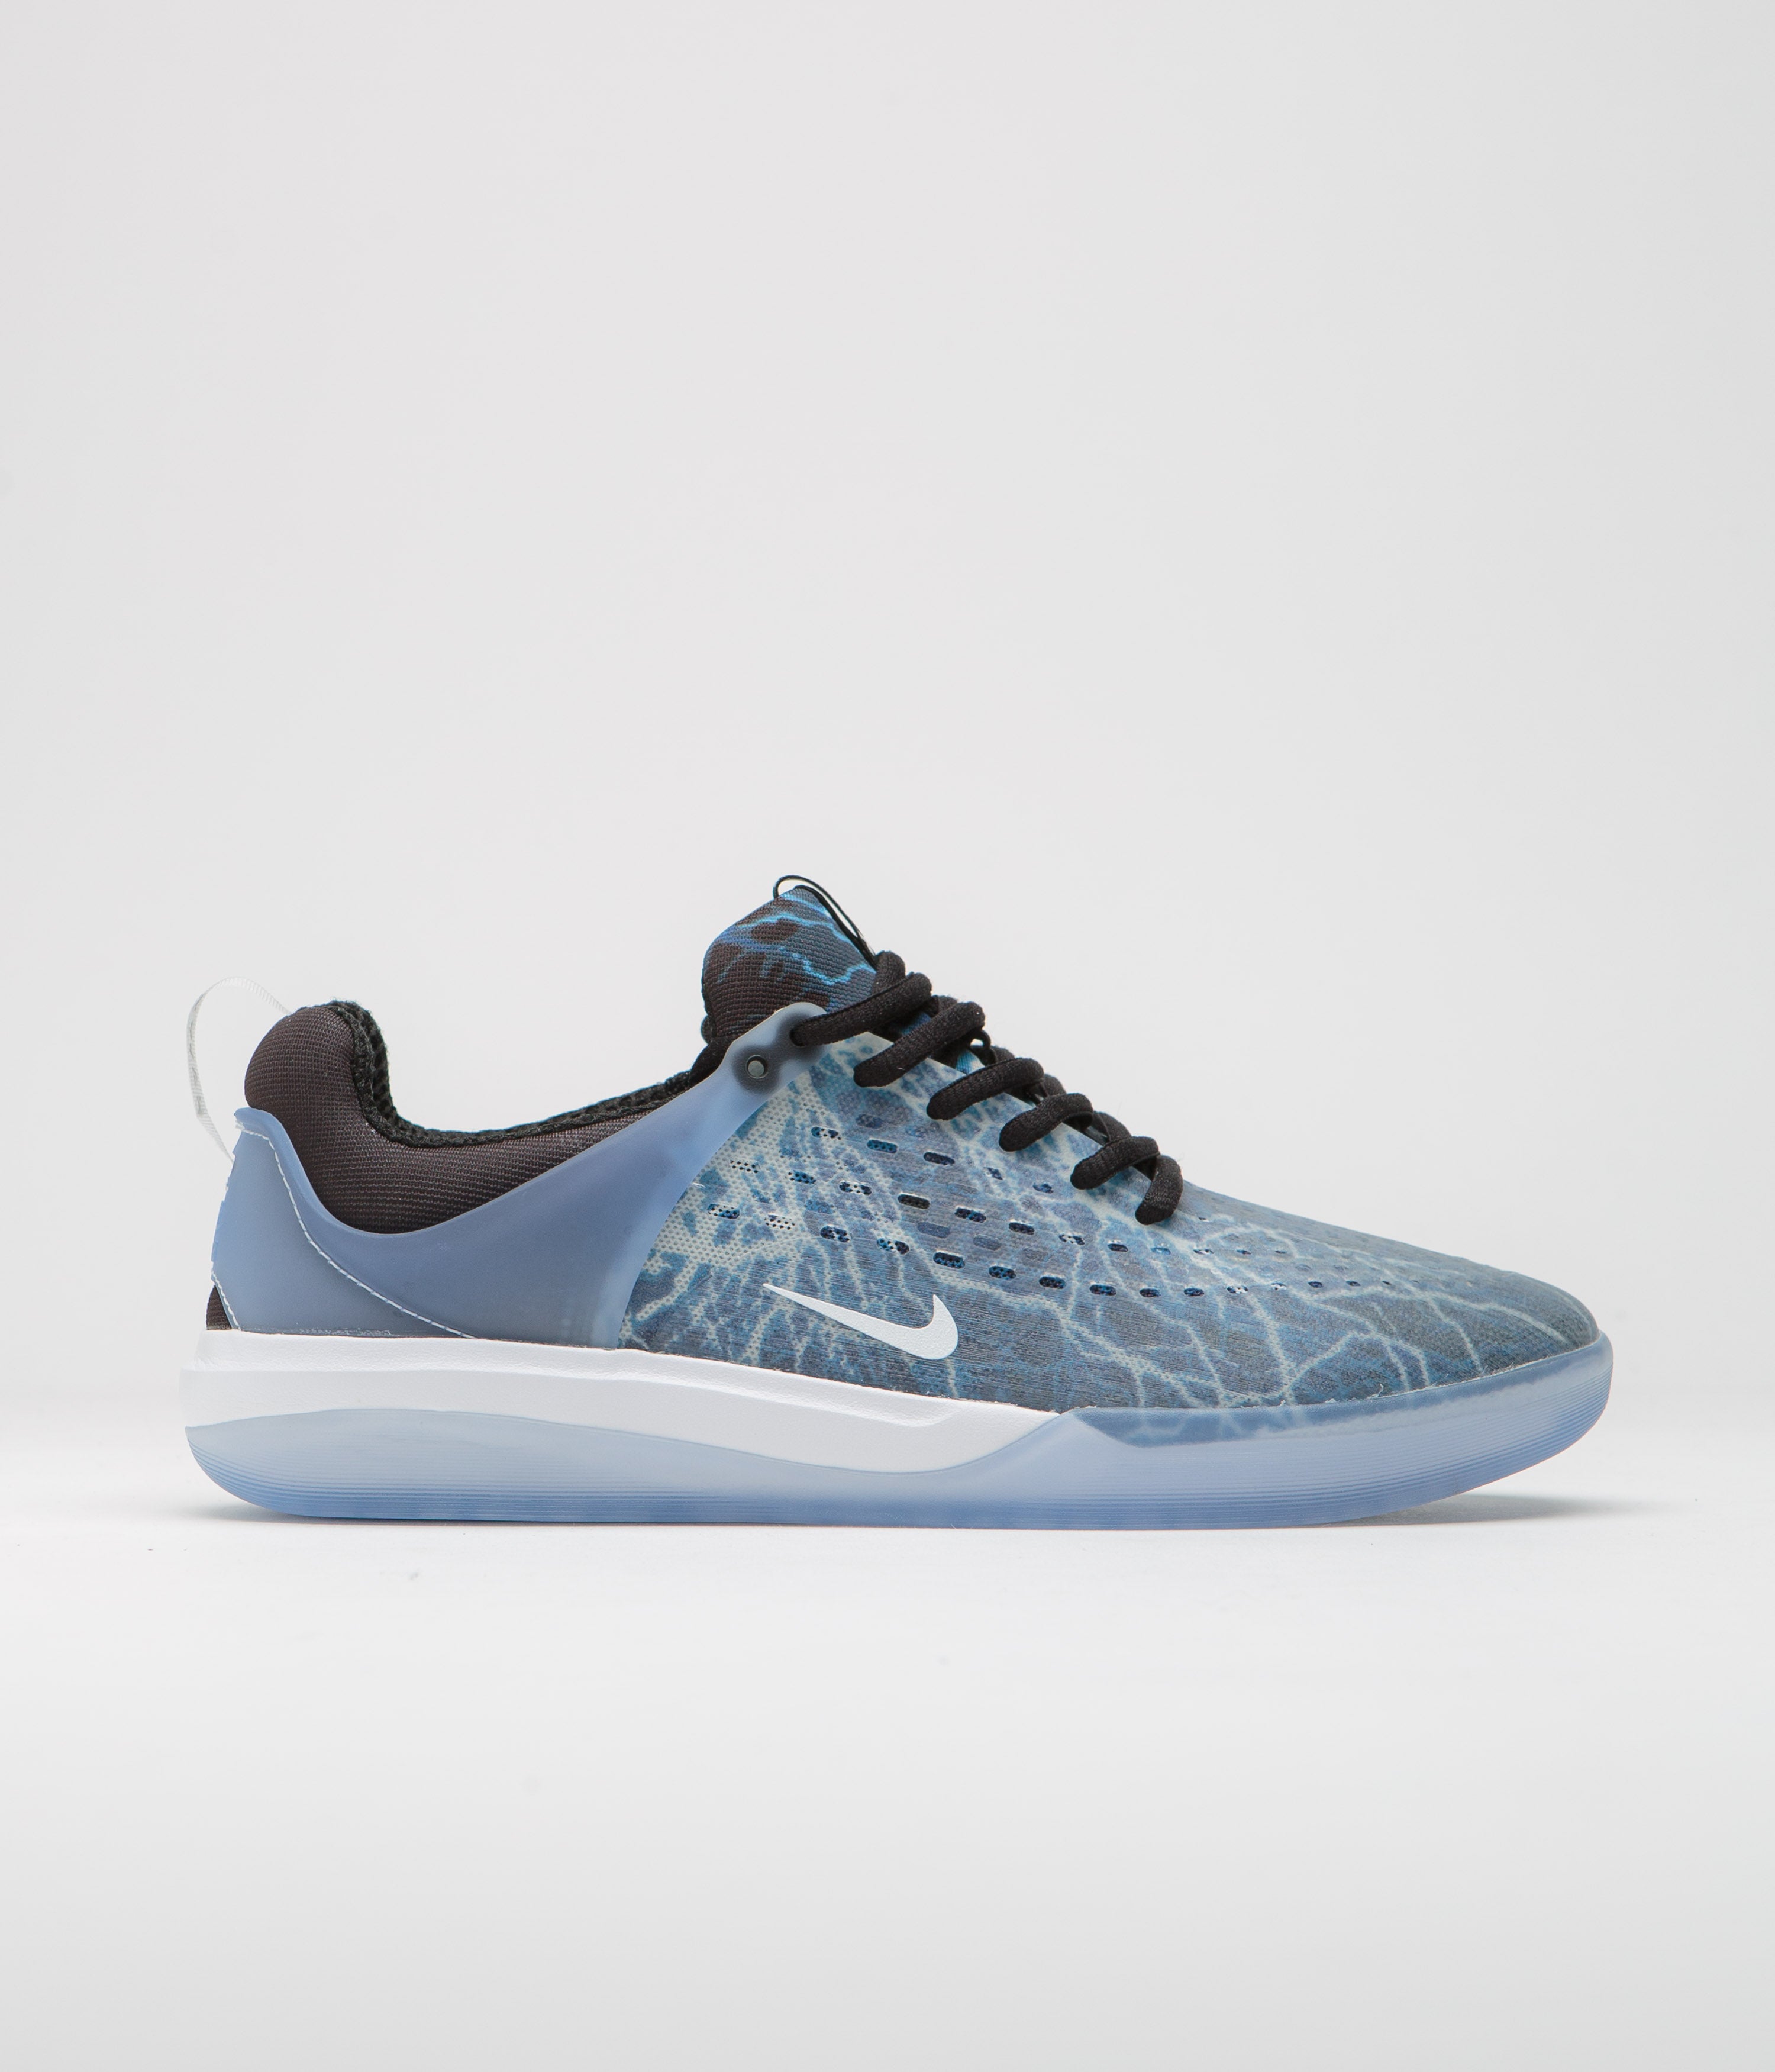 Image of Nike SB Nyjah 3 Premium